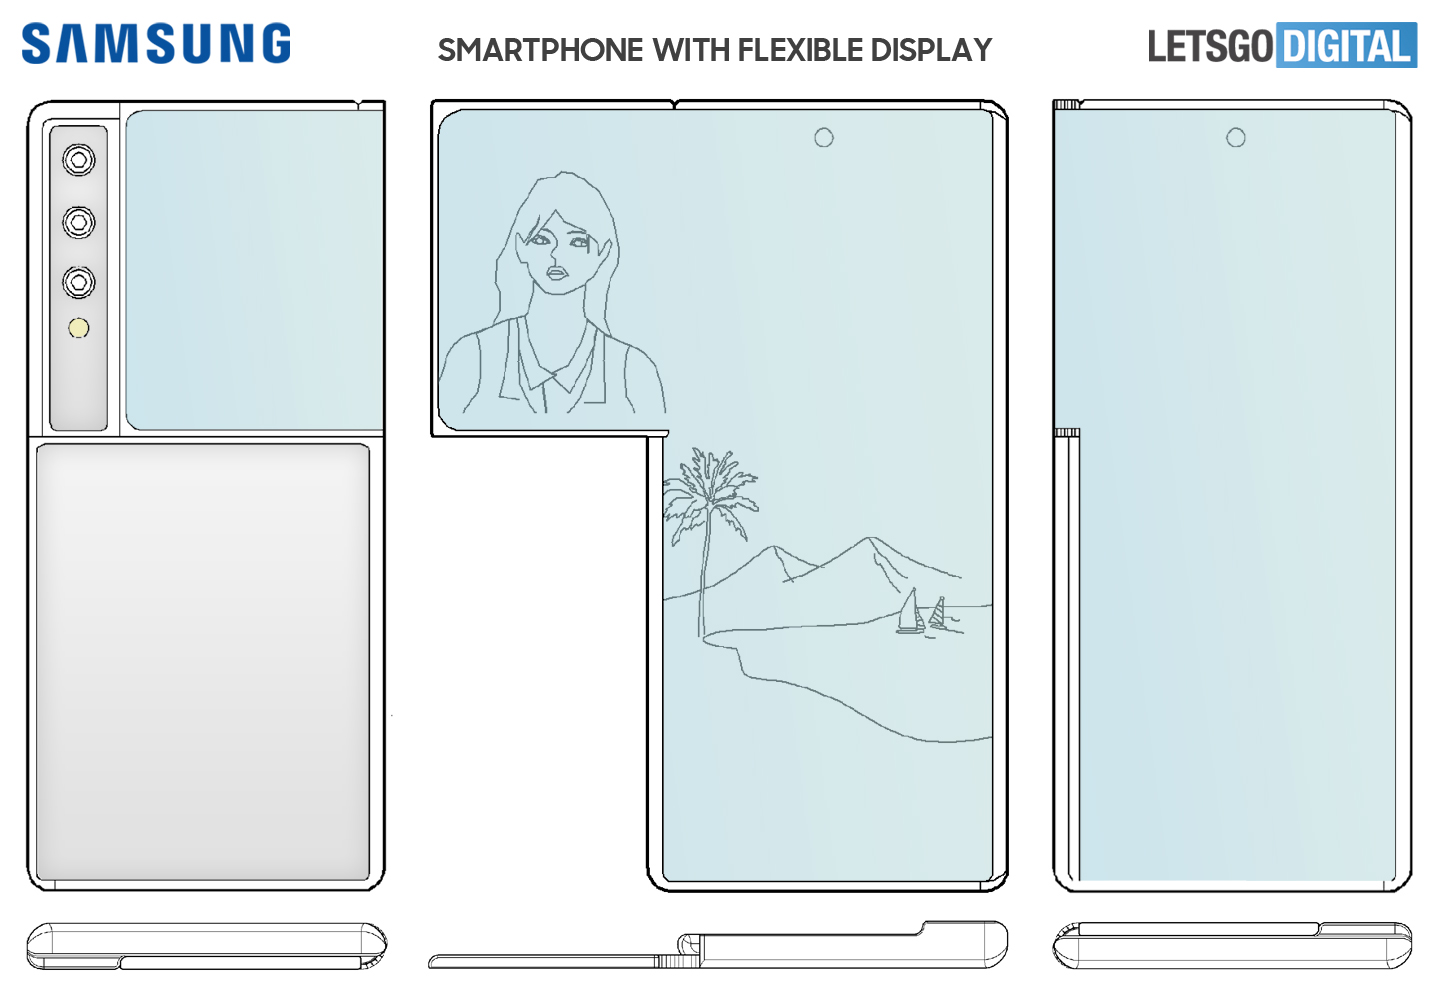 Samsung Galaxy Z series -Future of Flip smartphones
Galaxy smartphone flip display